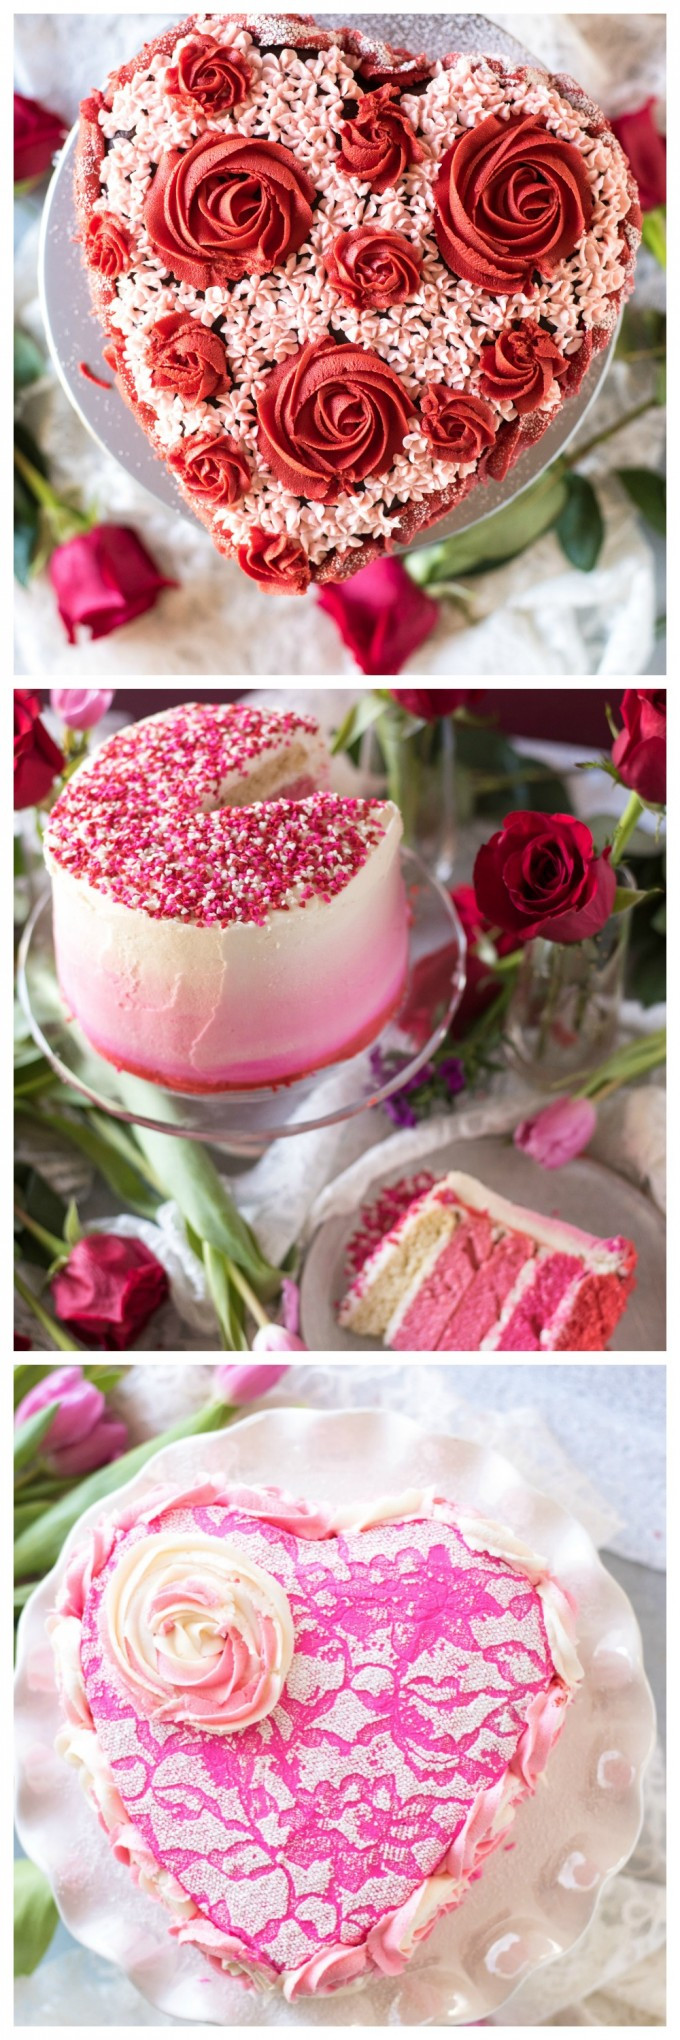 Valentines Day Cake Design
 Easy Valentine s Day Cake Decorating Tutorial Go Go Go Gourmet